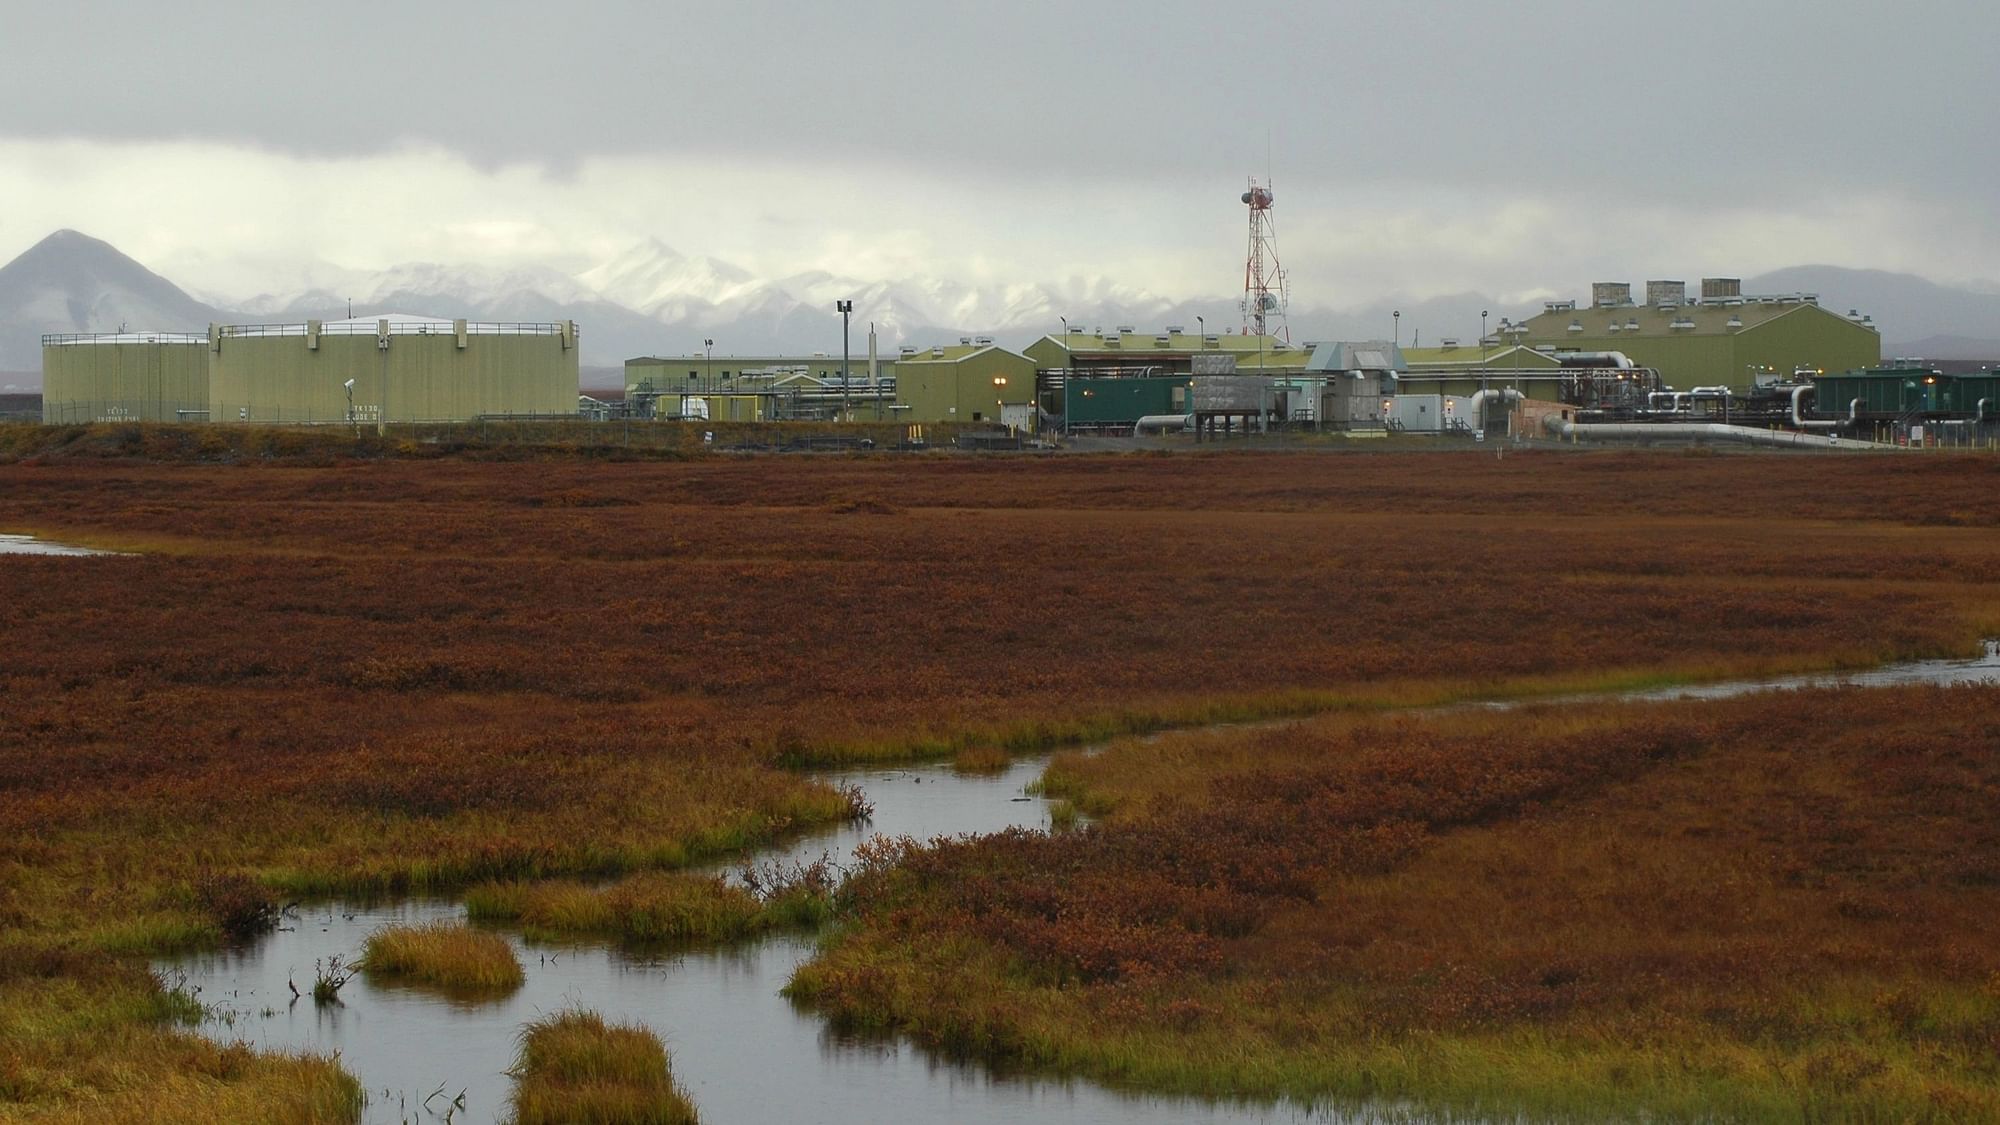 <div class="paragraphs"><p>Pump station of the Trans-Alaska pipeline near Franklin Buff.</p></div>